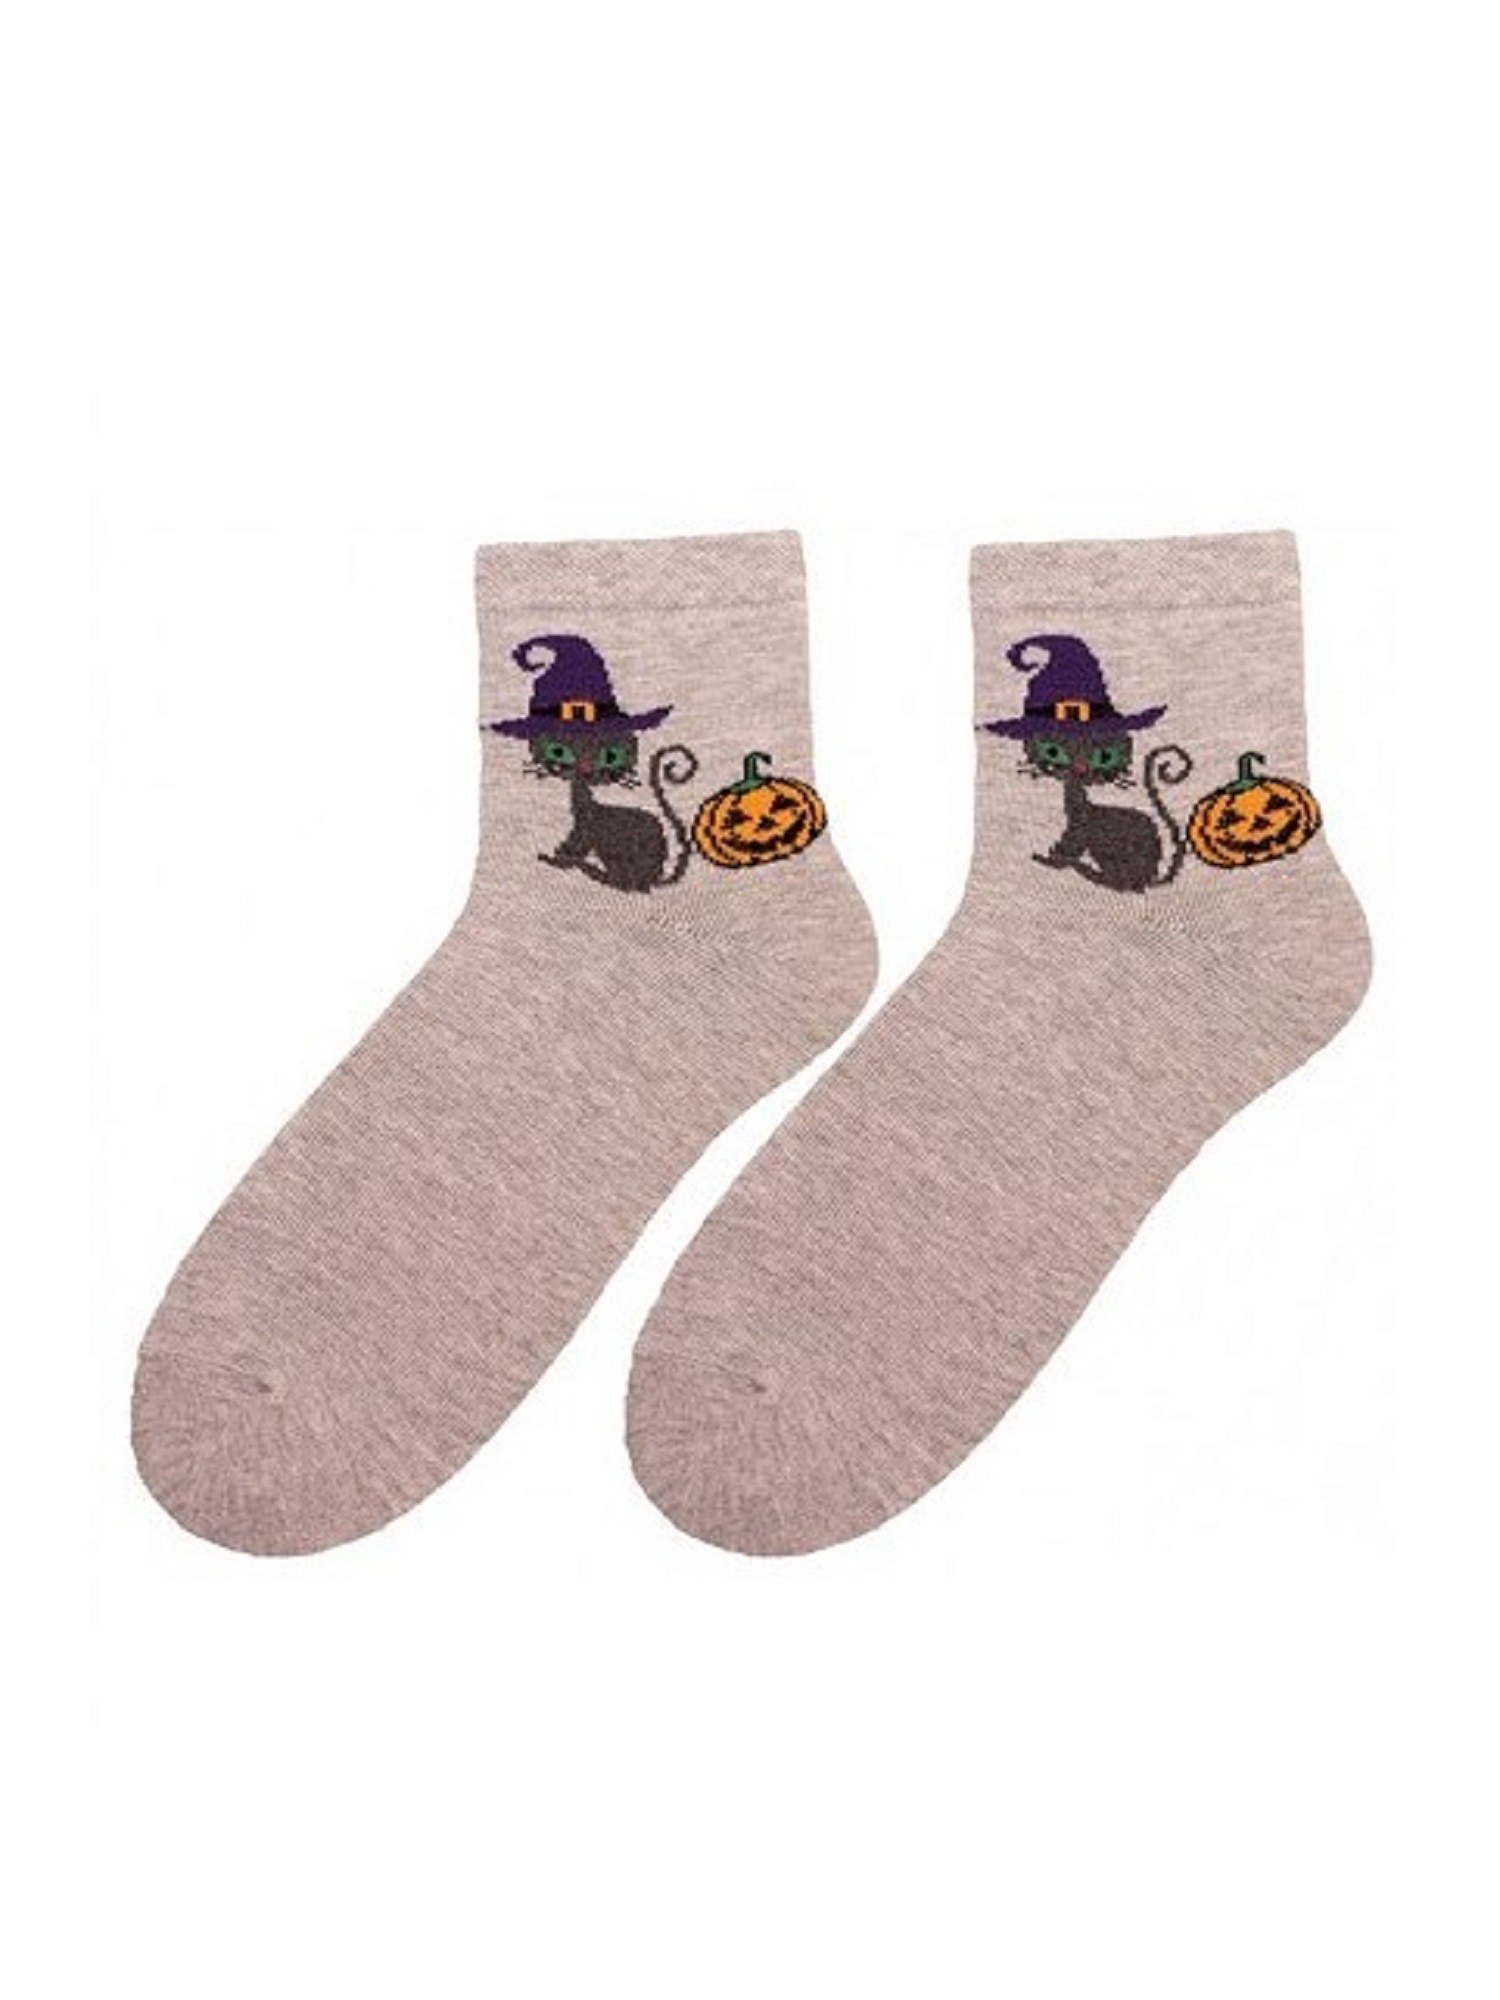 Bratex Popsox Halloween Socks 5643 Women's 36-41 Grey D-024